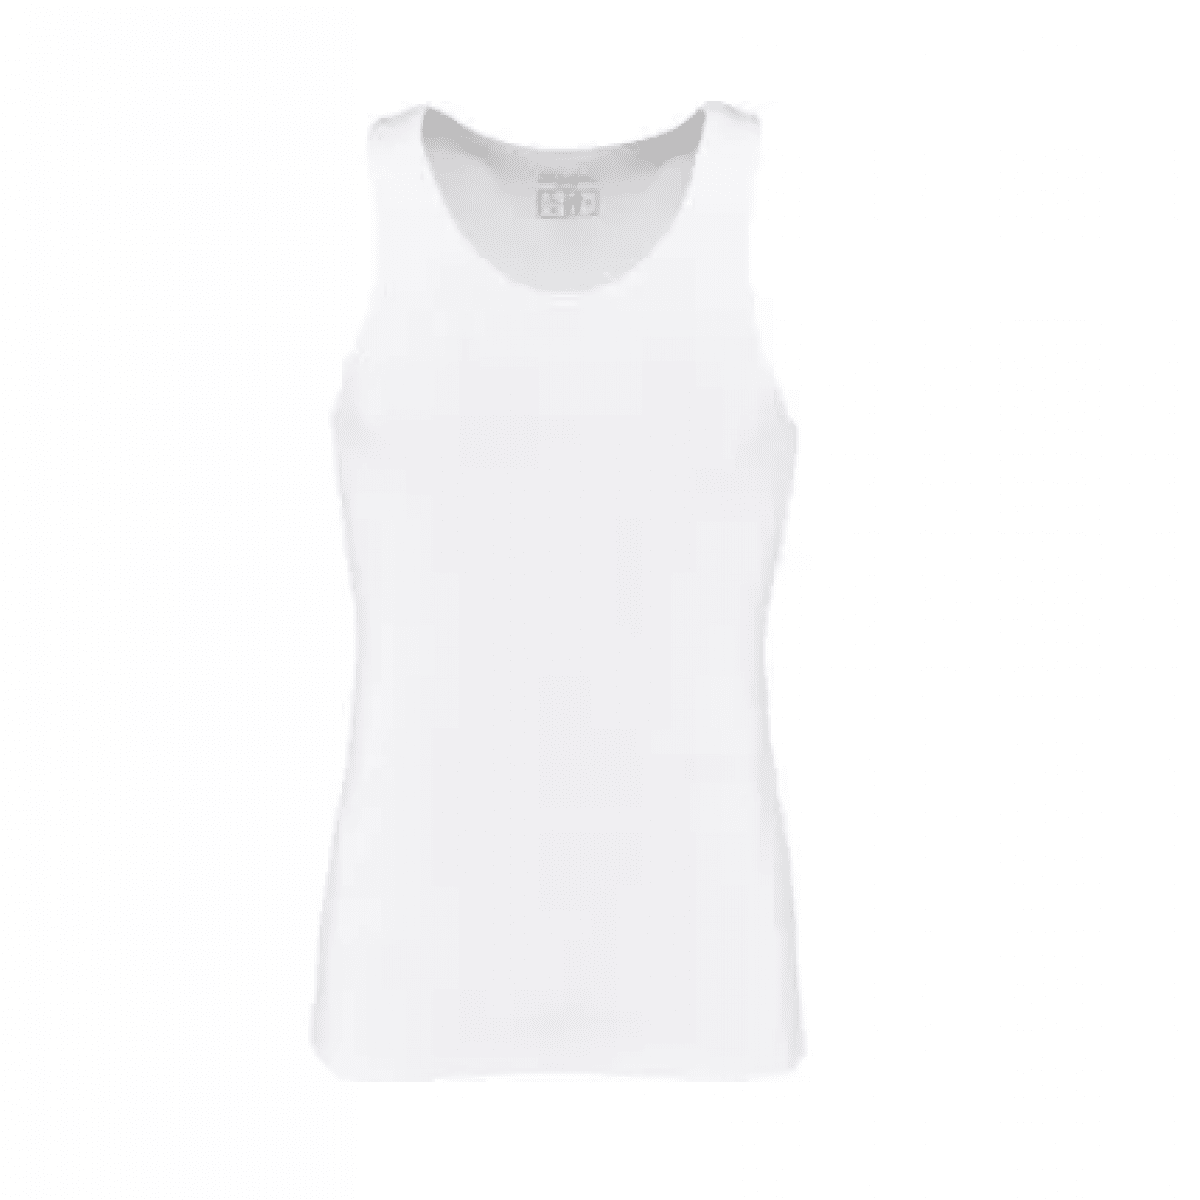 GK/KW13104875050 Biele tričko M, 2 ks